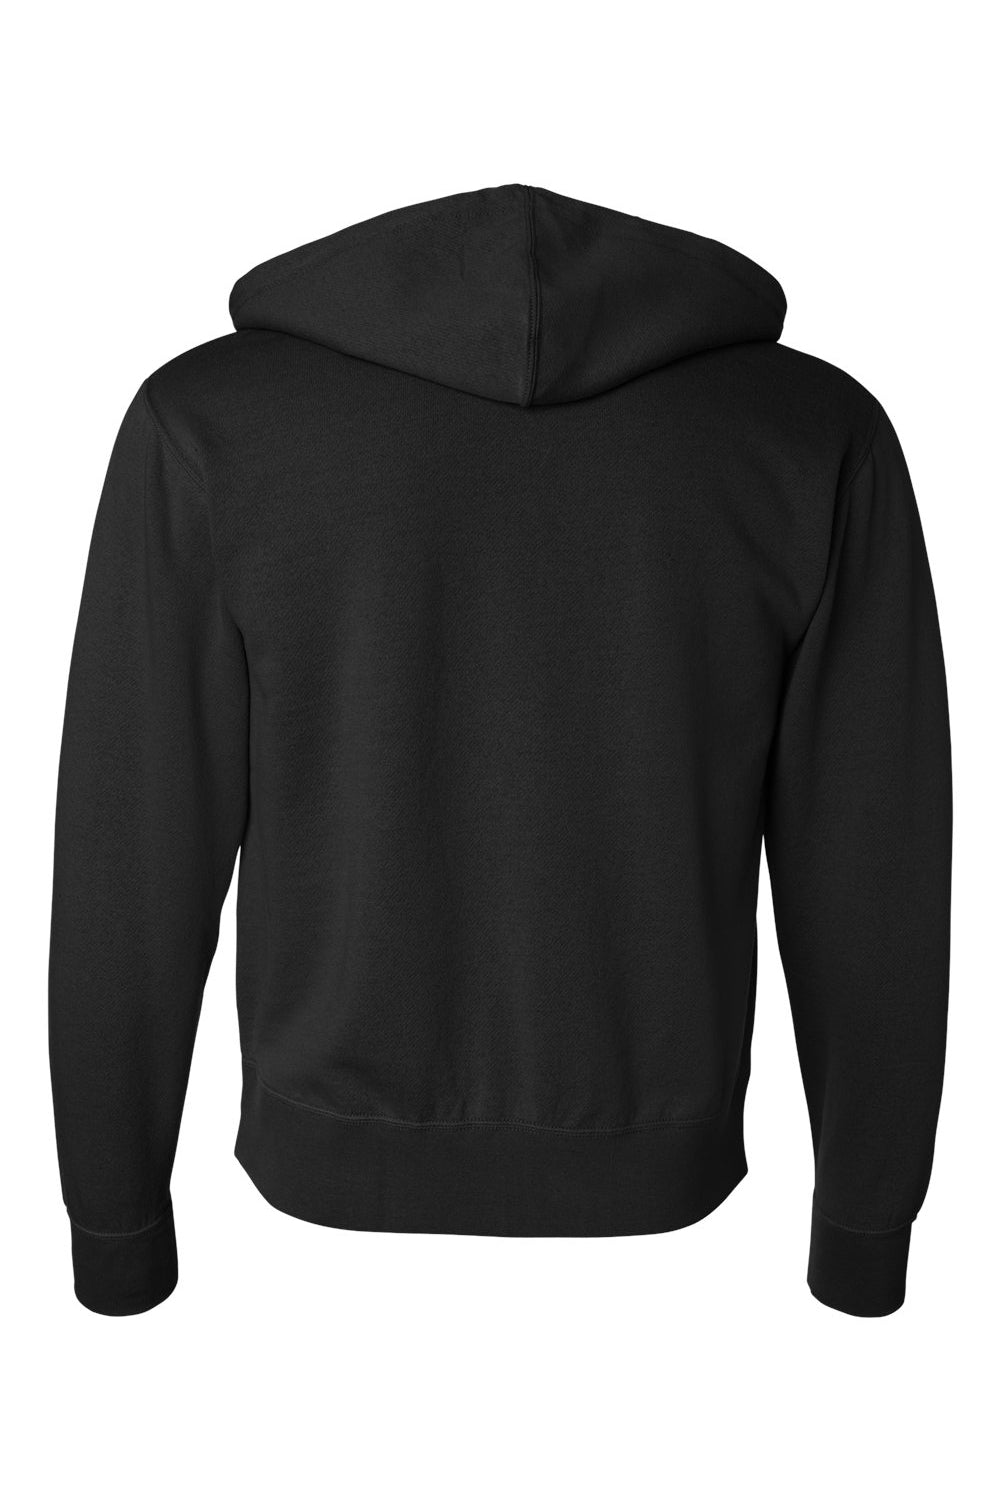 Independent Trading Co. AFX90UNZ Mens Full Zip Hooded Sweatshirt Hoodie Black Flat Back